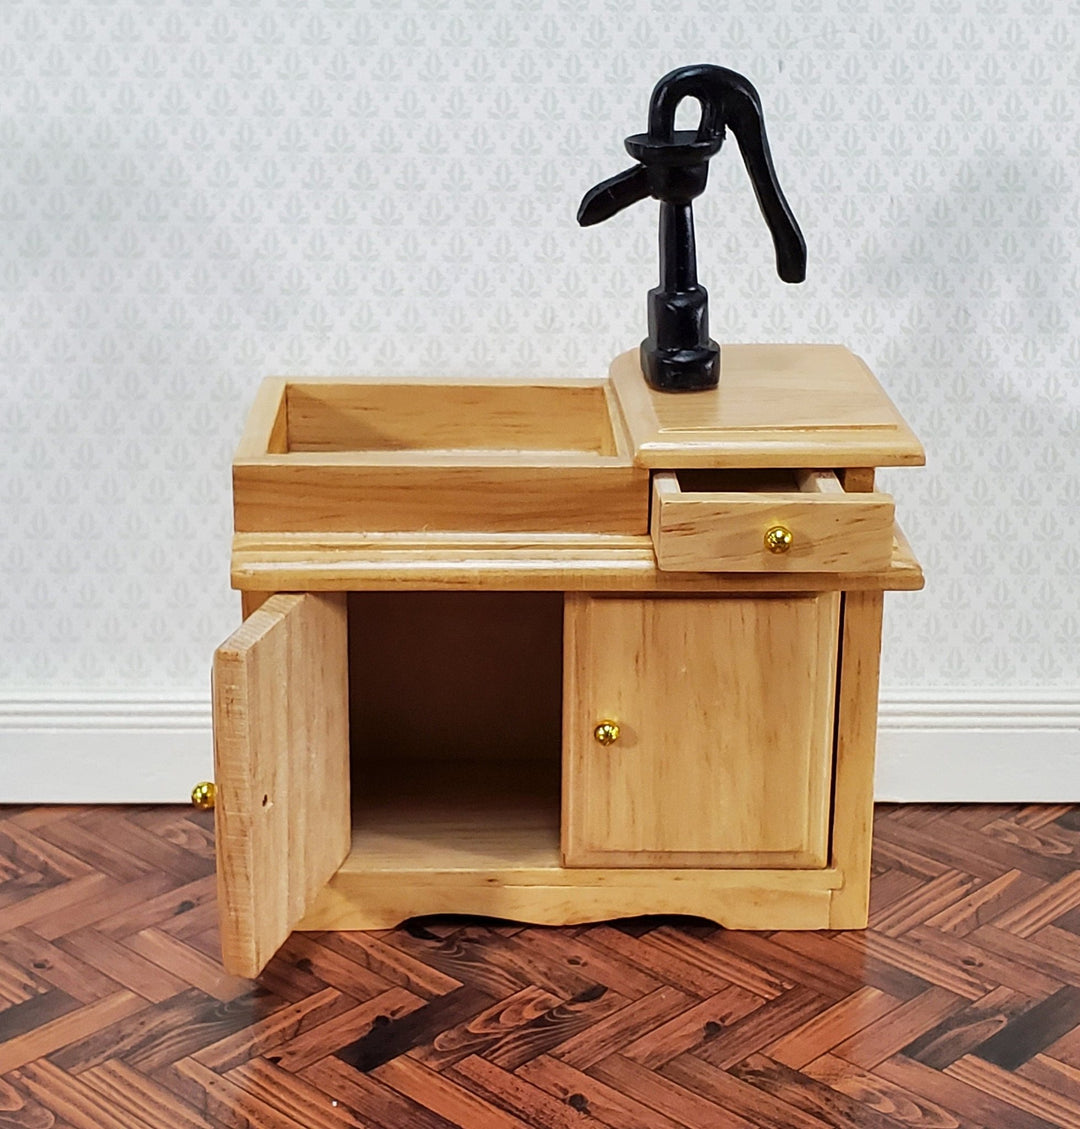 Dollhouse Sink Vintage Style with Pump Light Oak Finish 1:12 Scale Miniature Kitchen Furniture - Miniature Crush